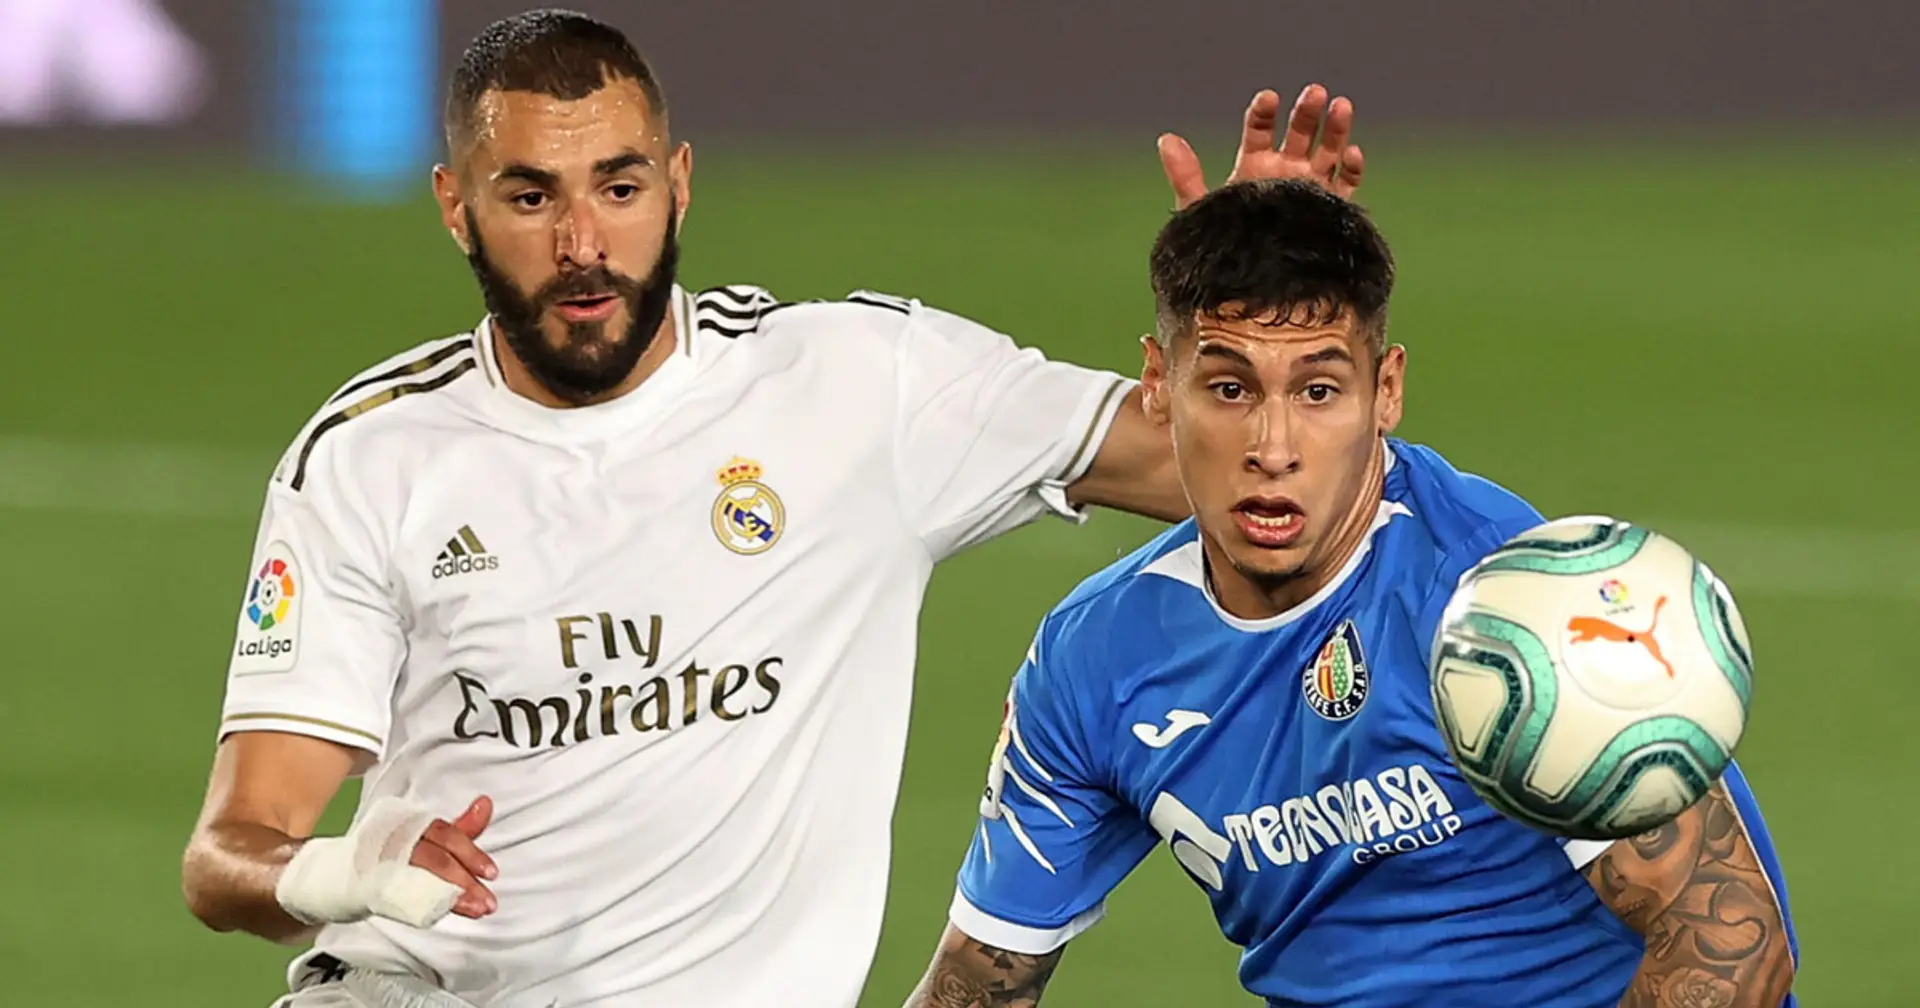 Real Madrid vs Getafe: line-ups, score predictions, head-to-head record & more — preview